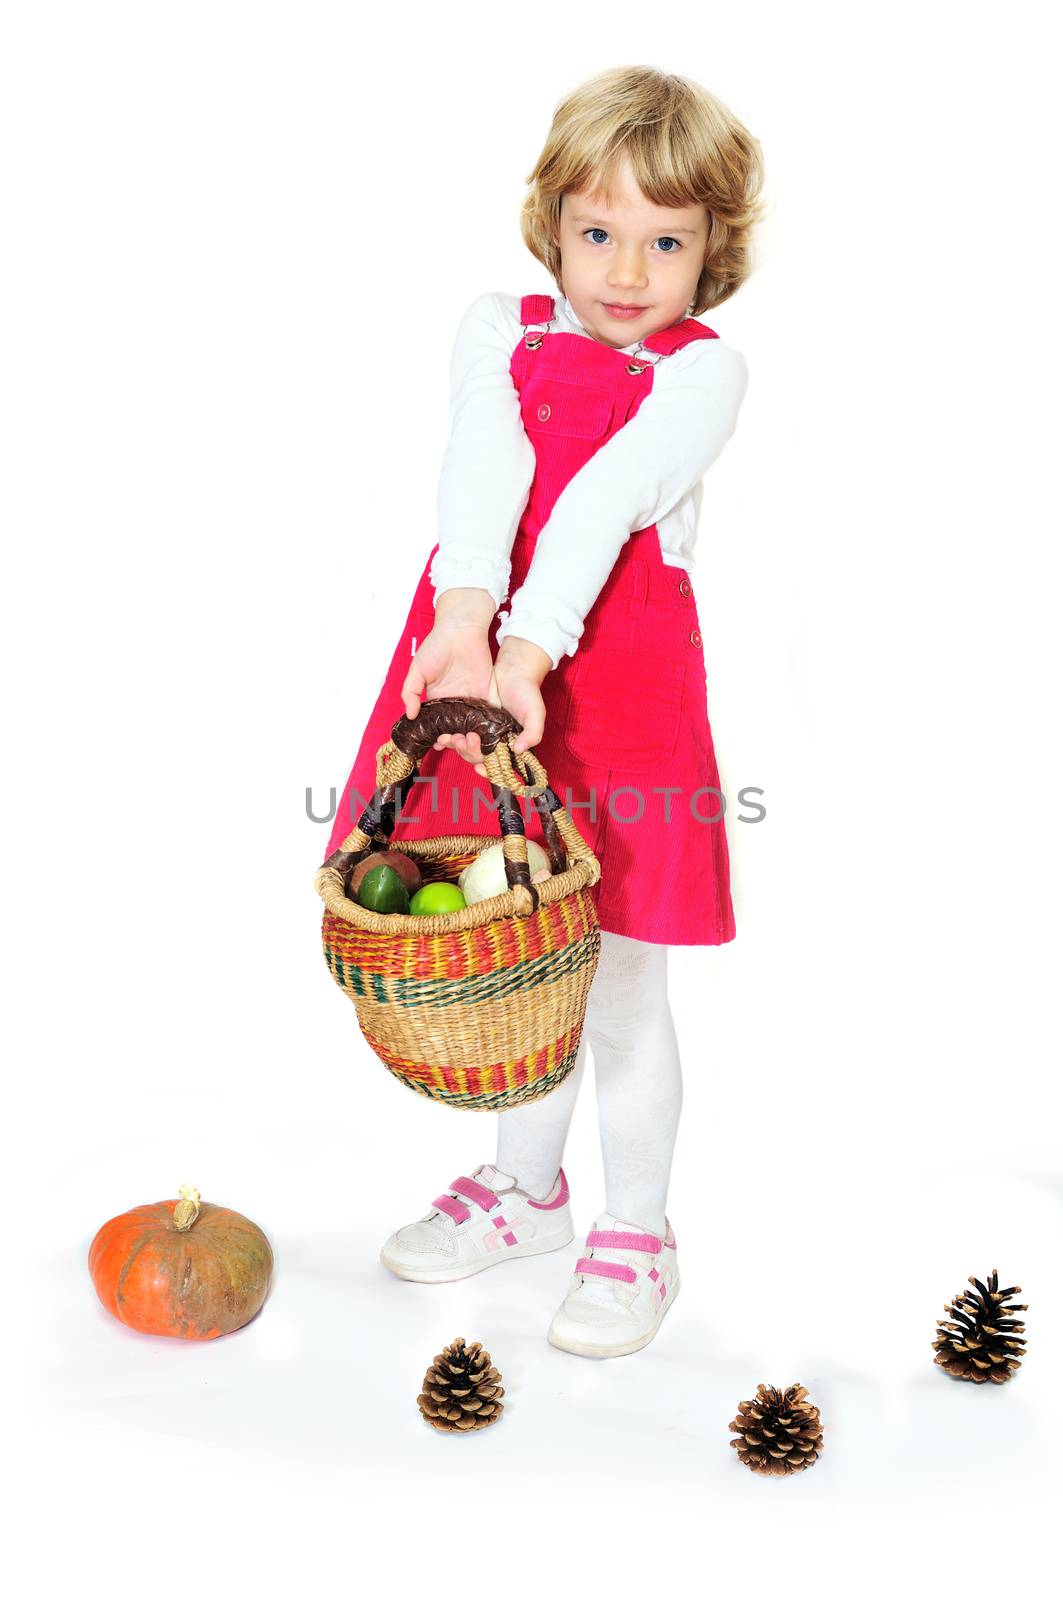 little girl standing with basket full of vegetables